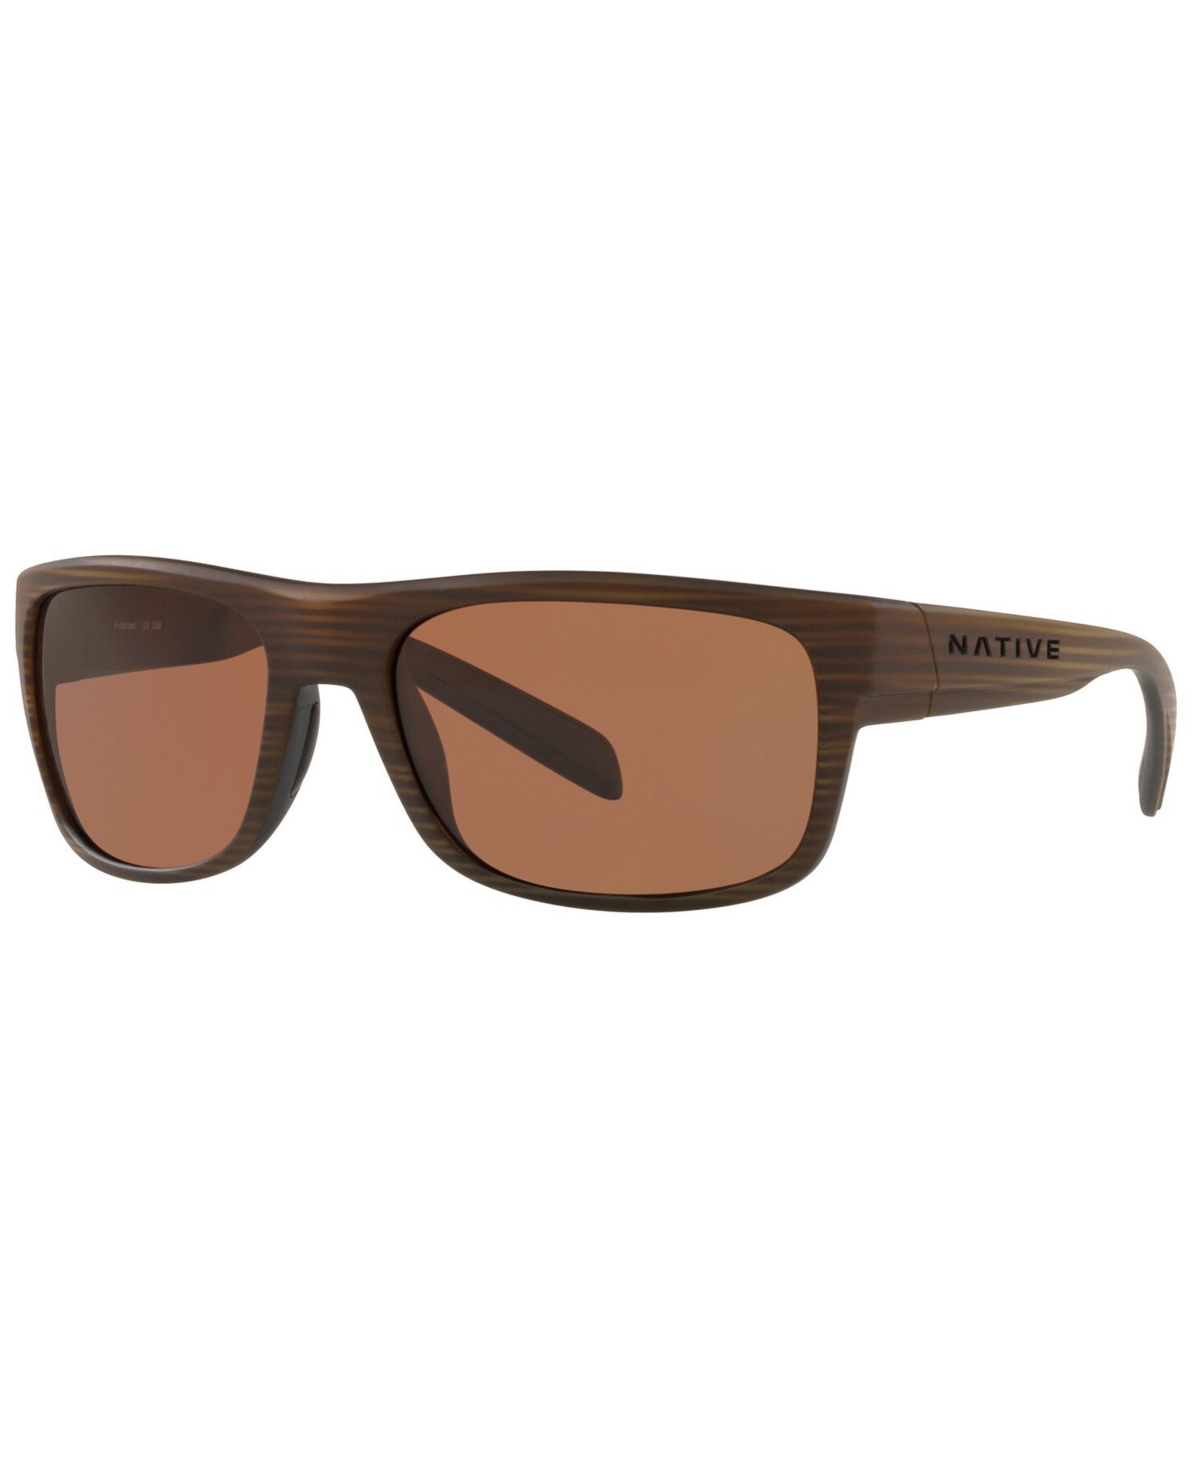 Native Eyewear Native Unisex Polarized Sunglasses, Xd9003 58 In Wood,brown